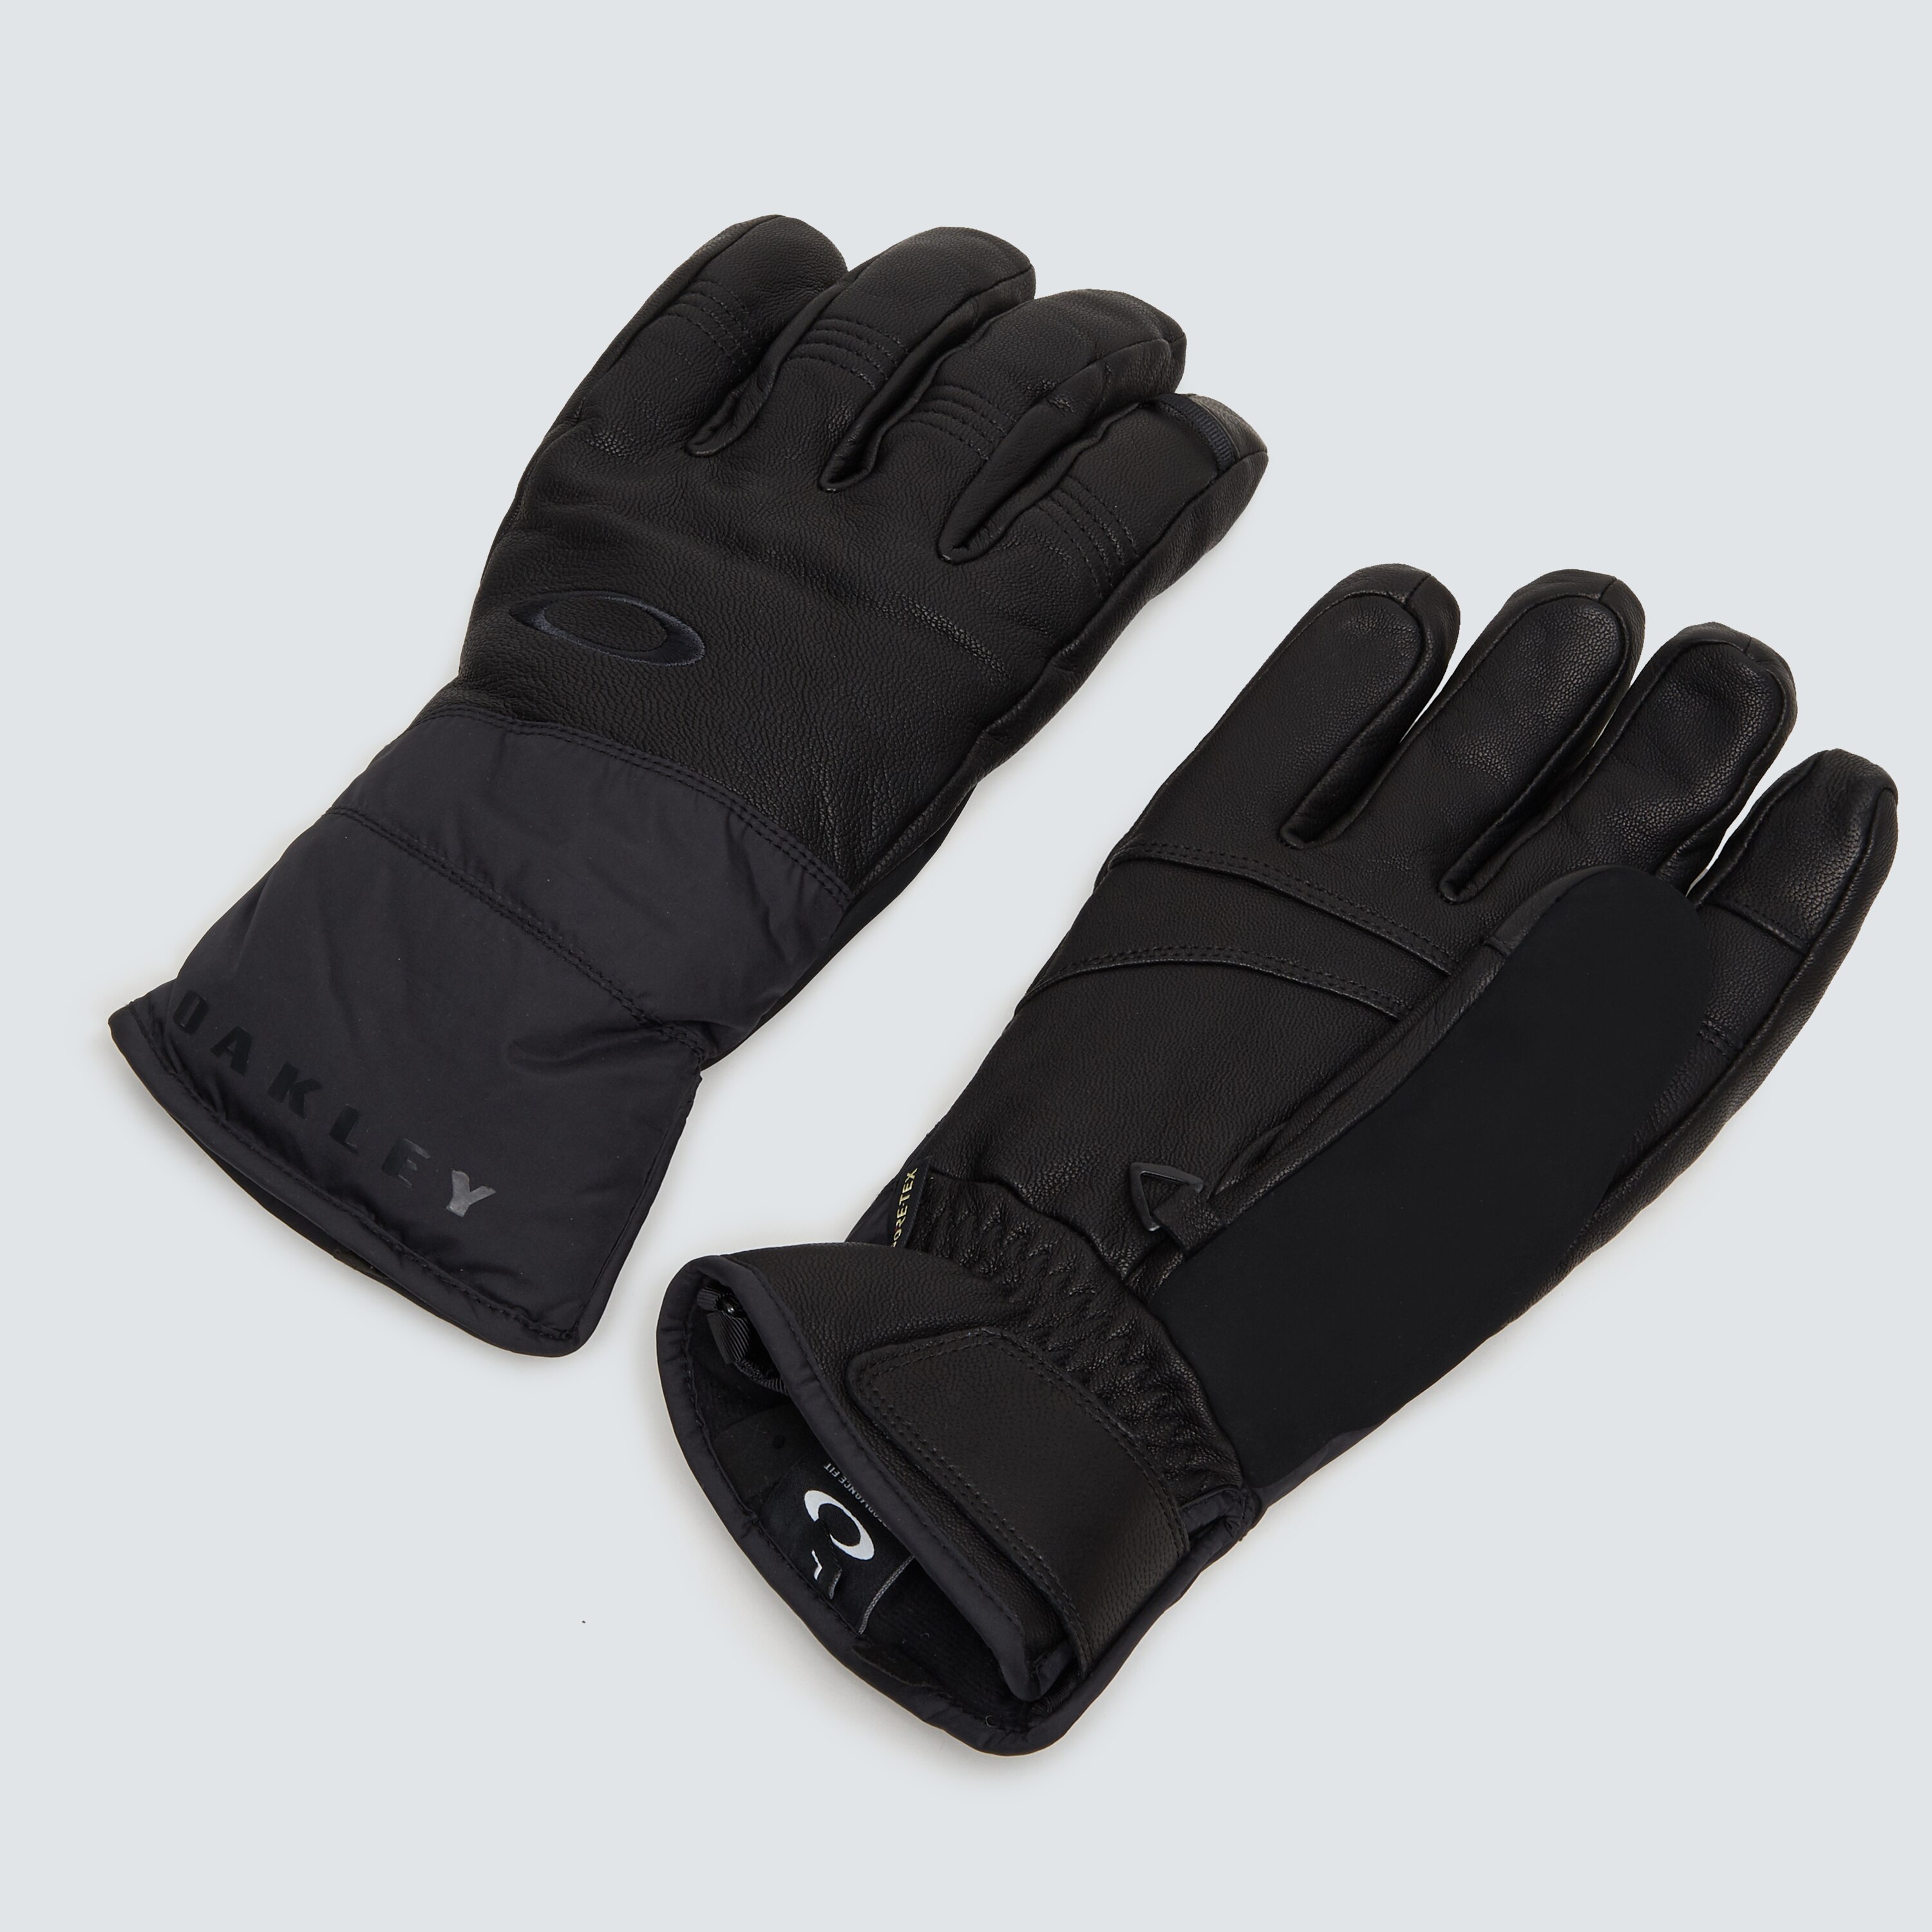 oakley leather gloves